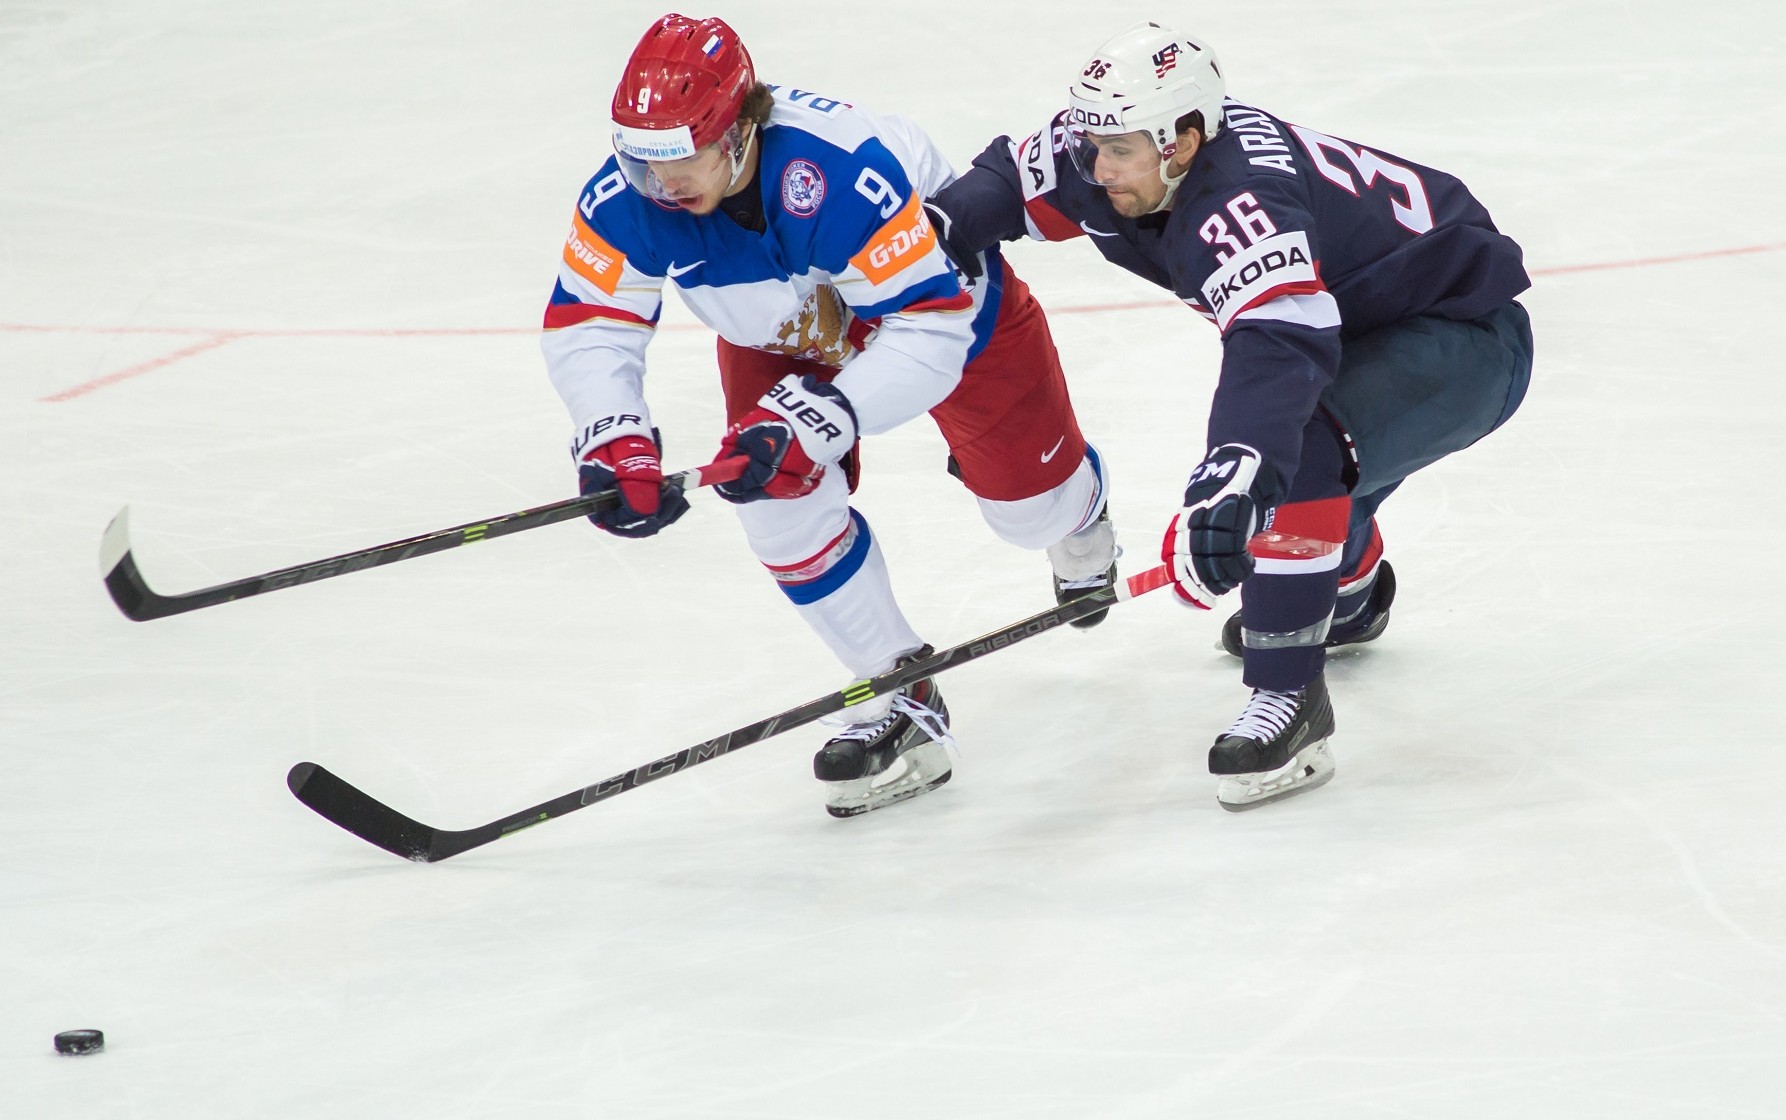 HOCKEY: MAY 16 IIHF Ice Hockey World Championships - USA v Russia